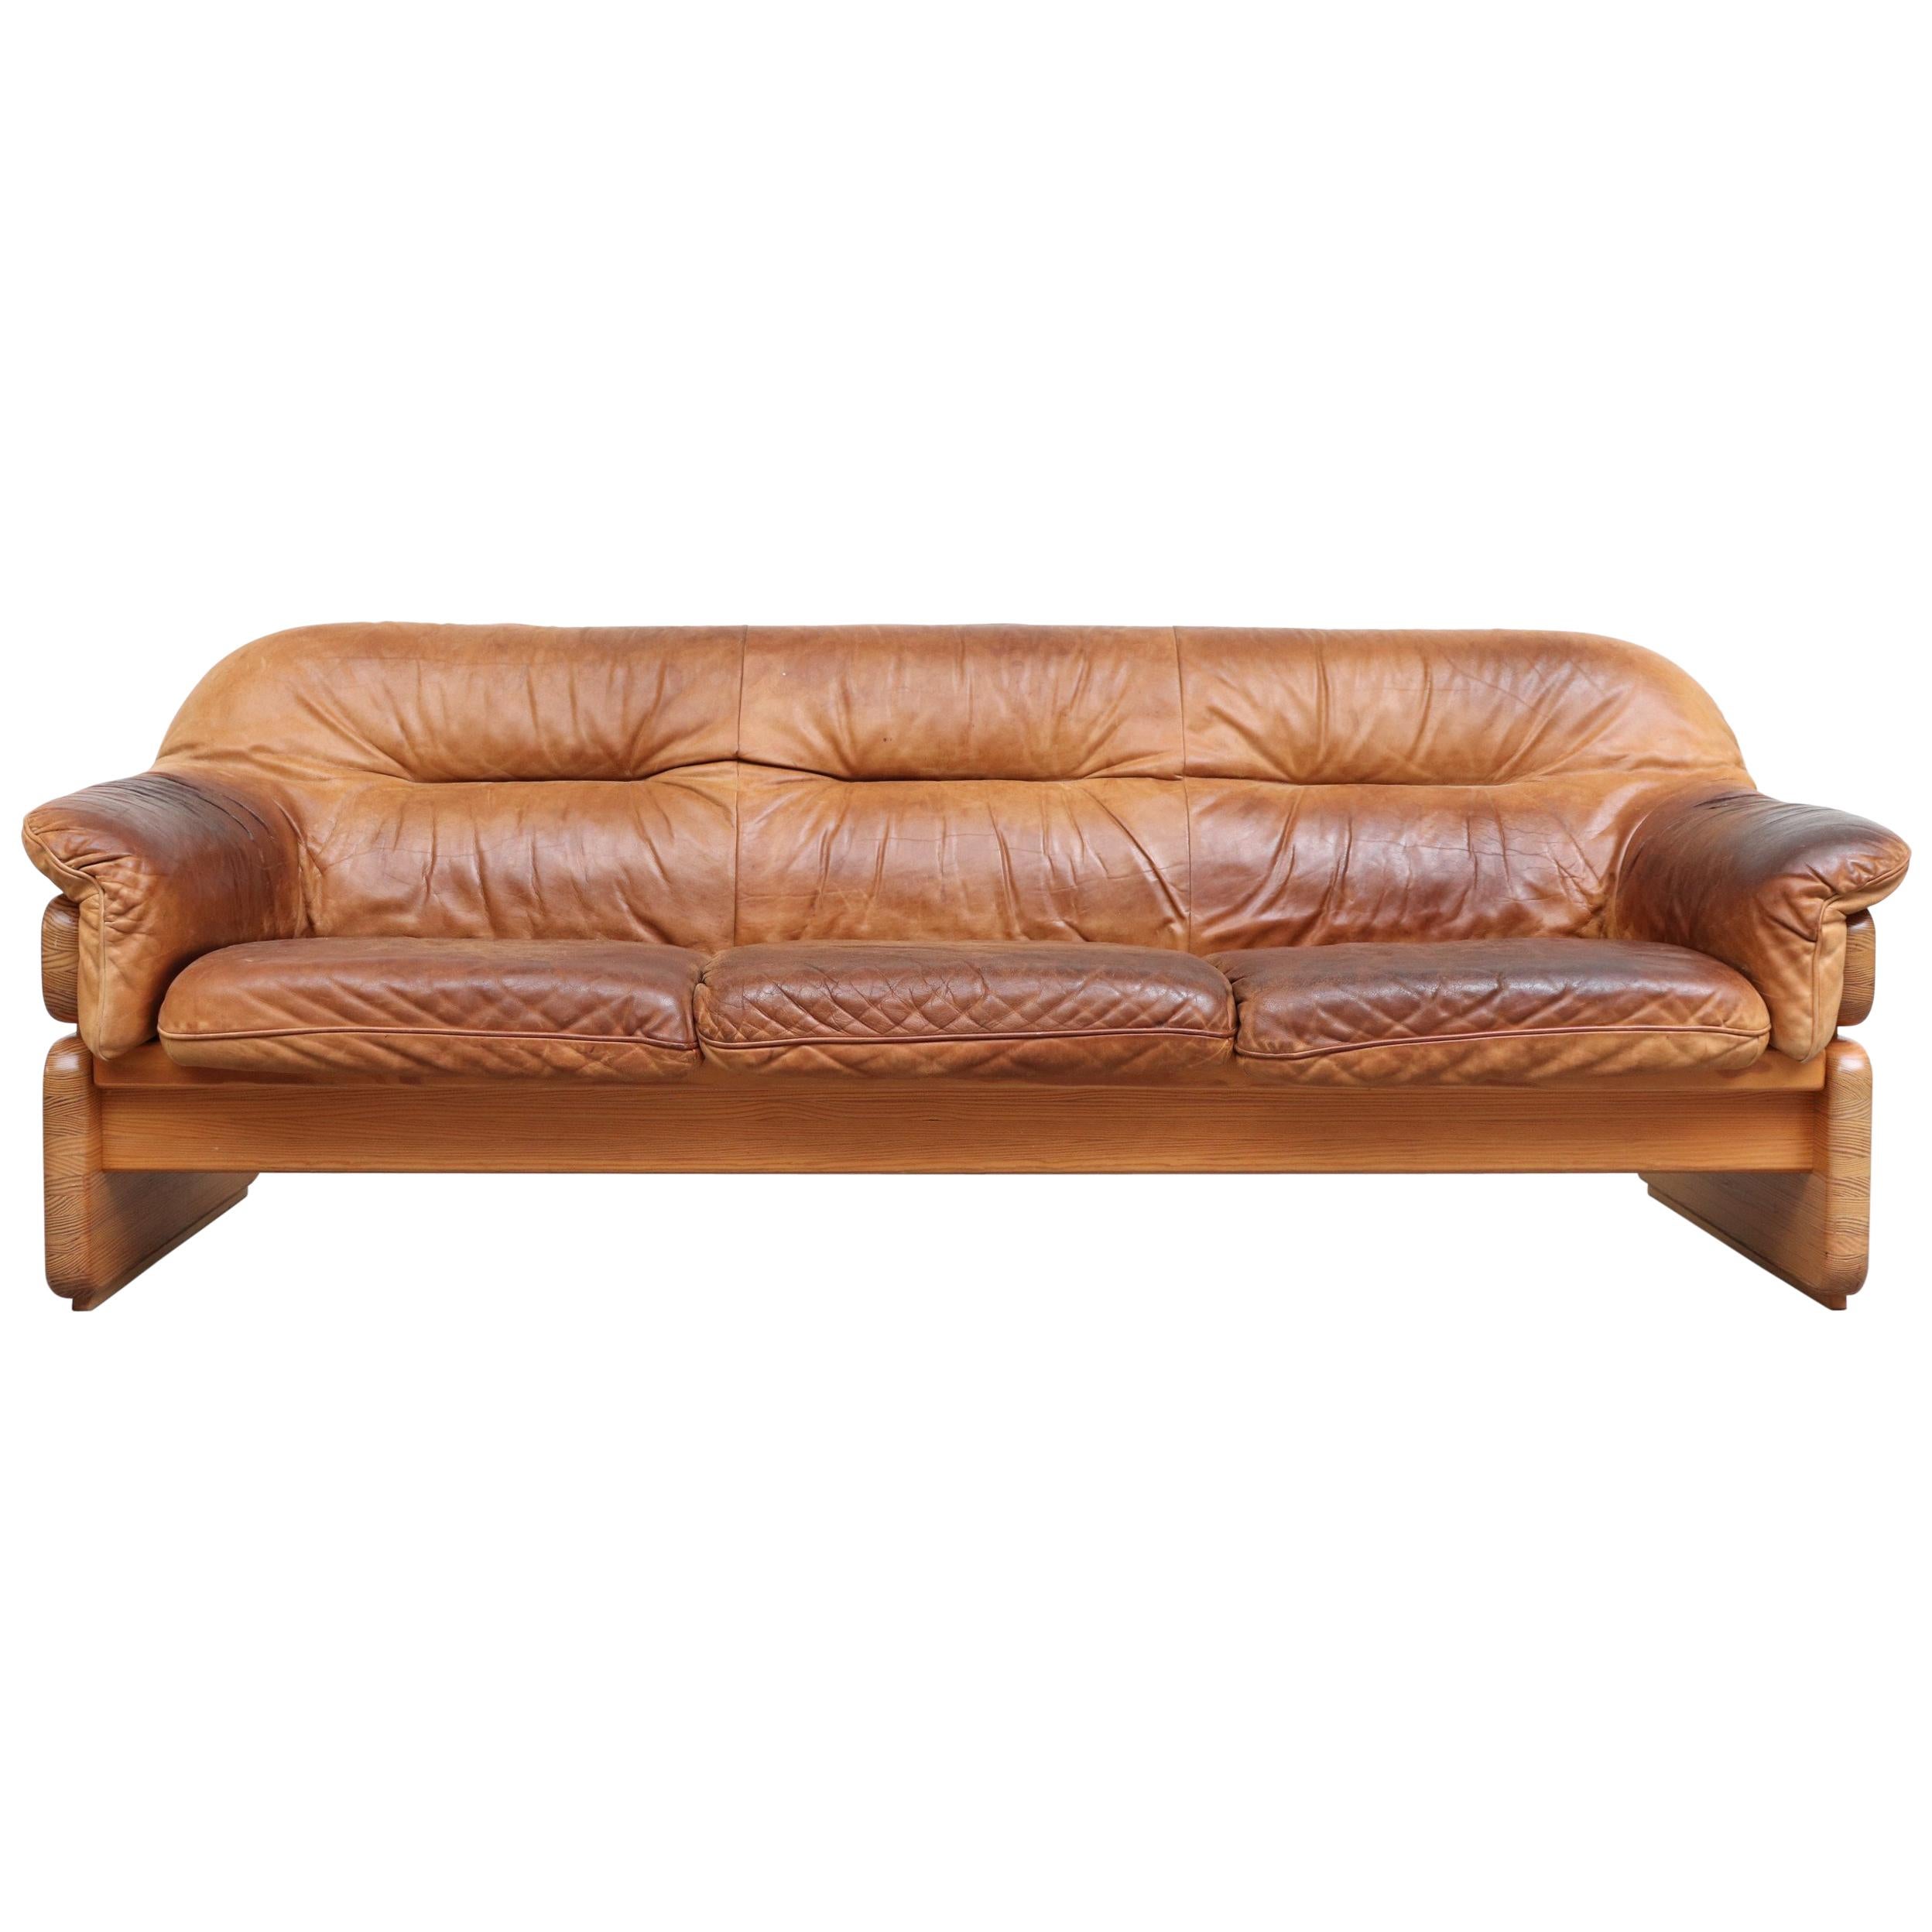 Gerard van den Berg Inspired Pine and Leather 3-Seat Sofa